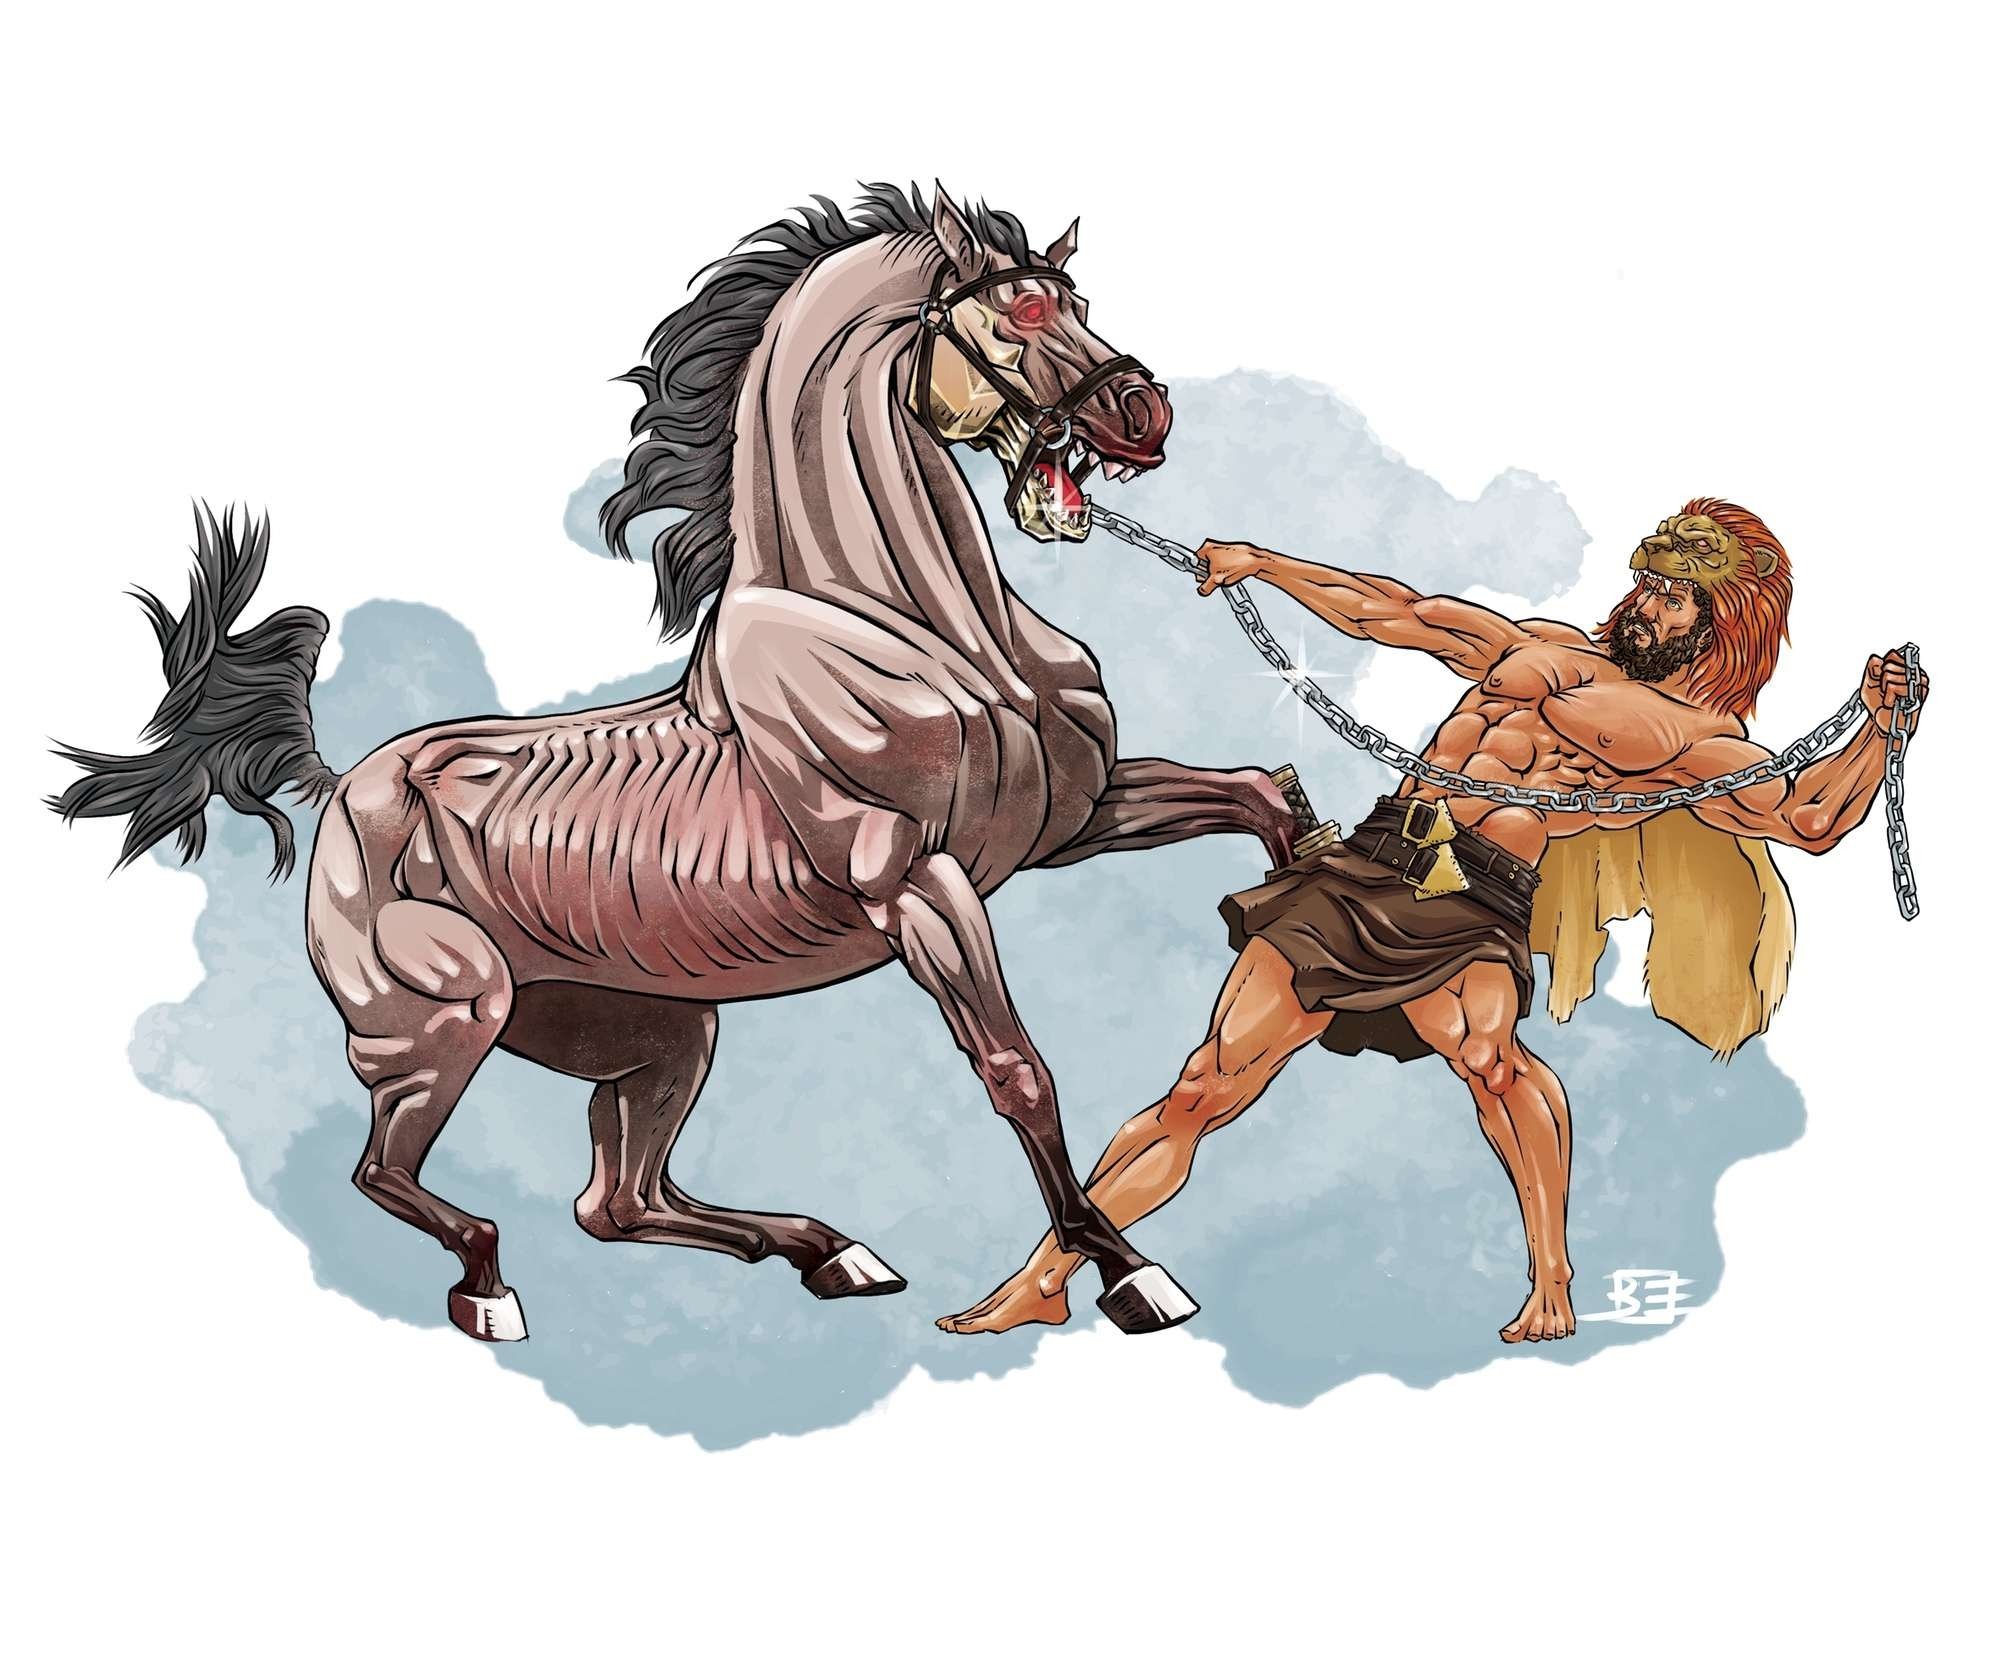 Мужчина привел лошадь. Конидиомера подвиг Геракла. Геракл и кони Диомеда. Восьмой подвиг: кони Диомеда. 12 Подвигов Геракла кони Диомеда.